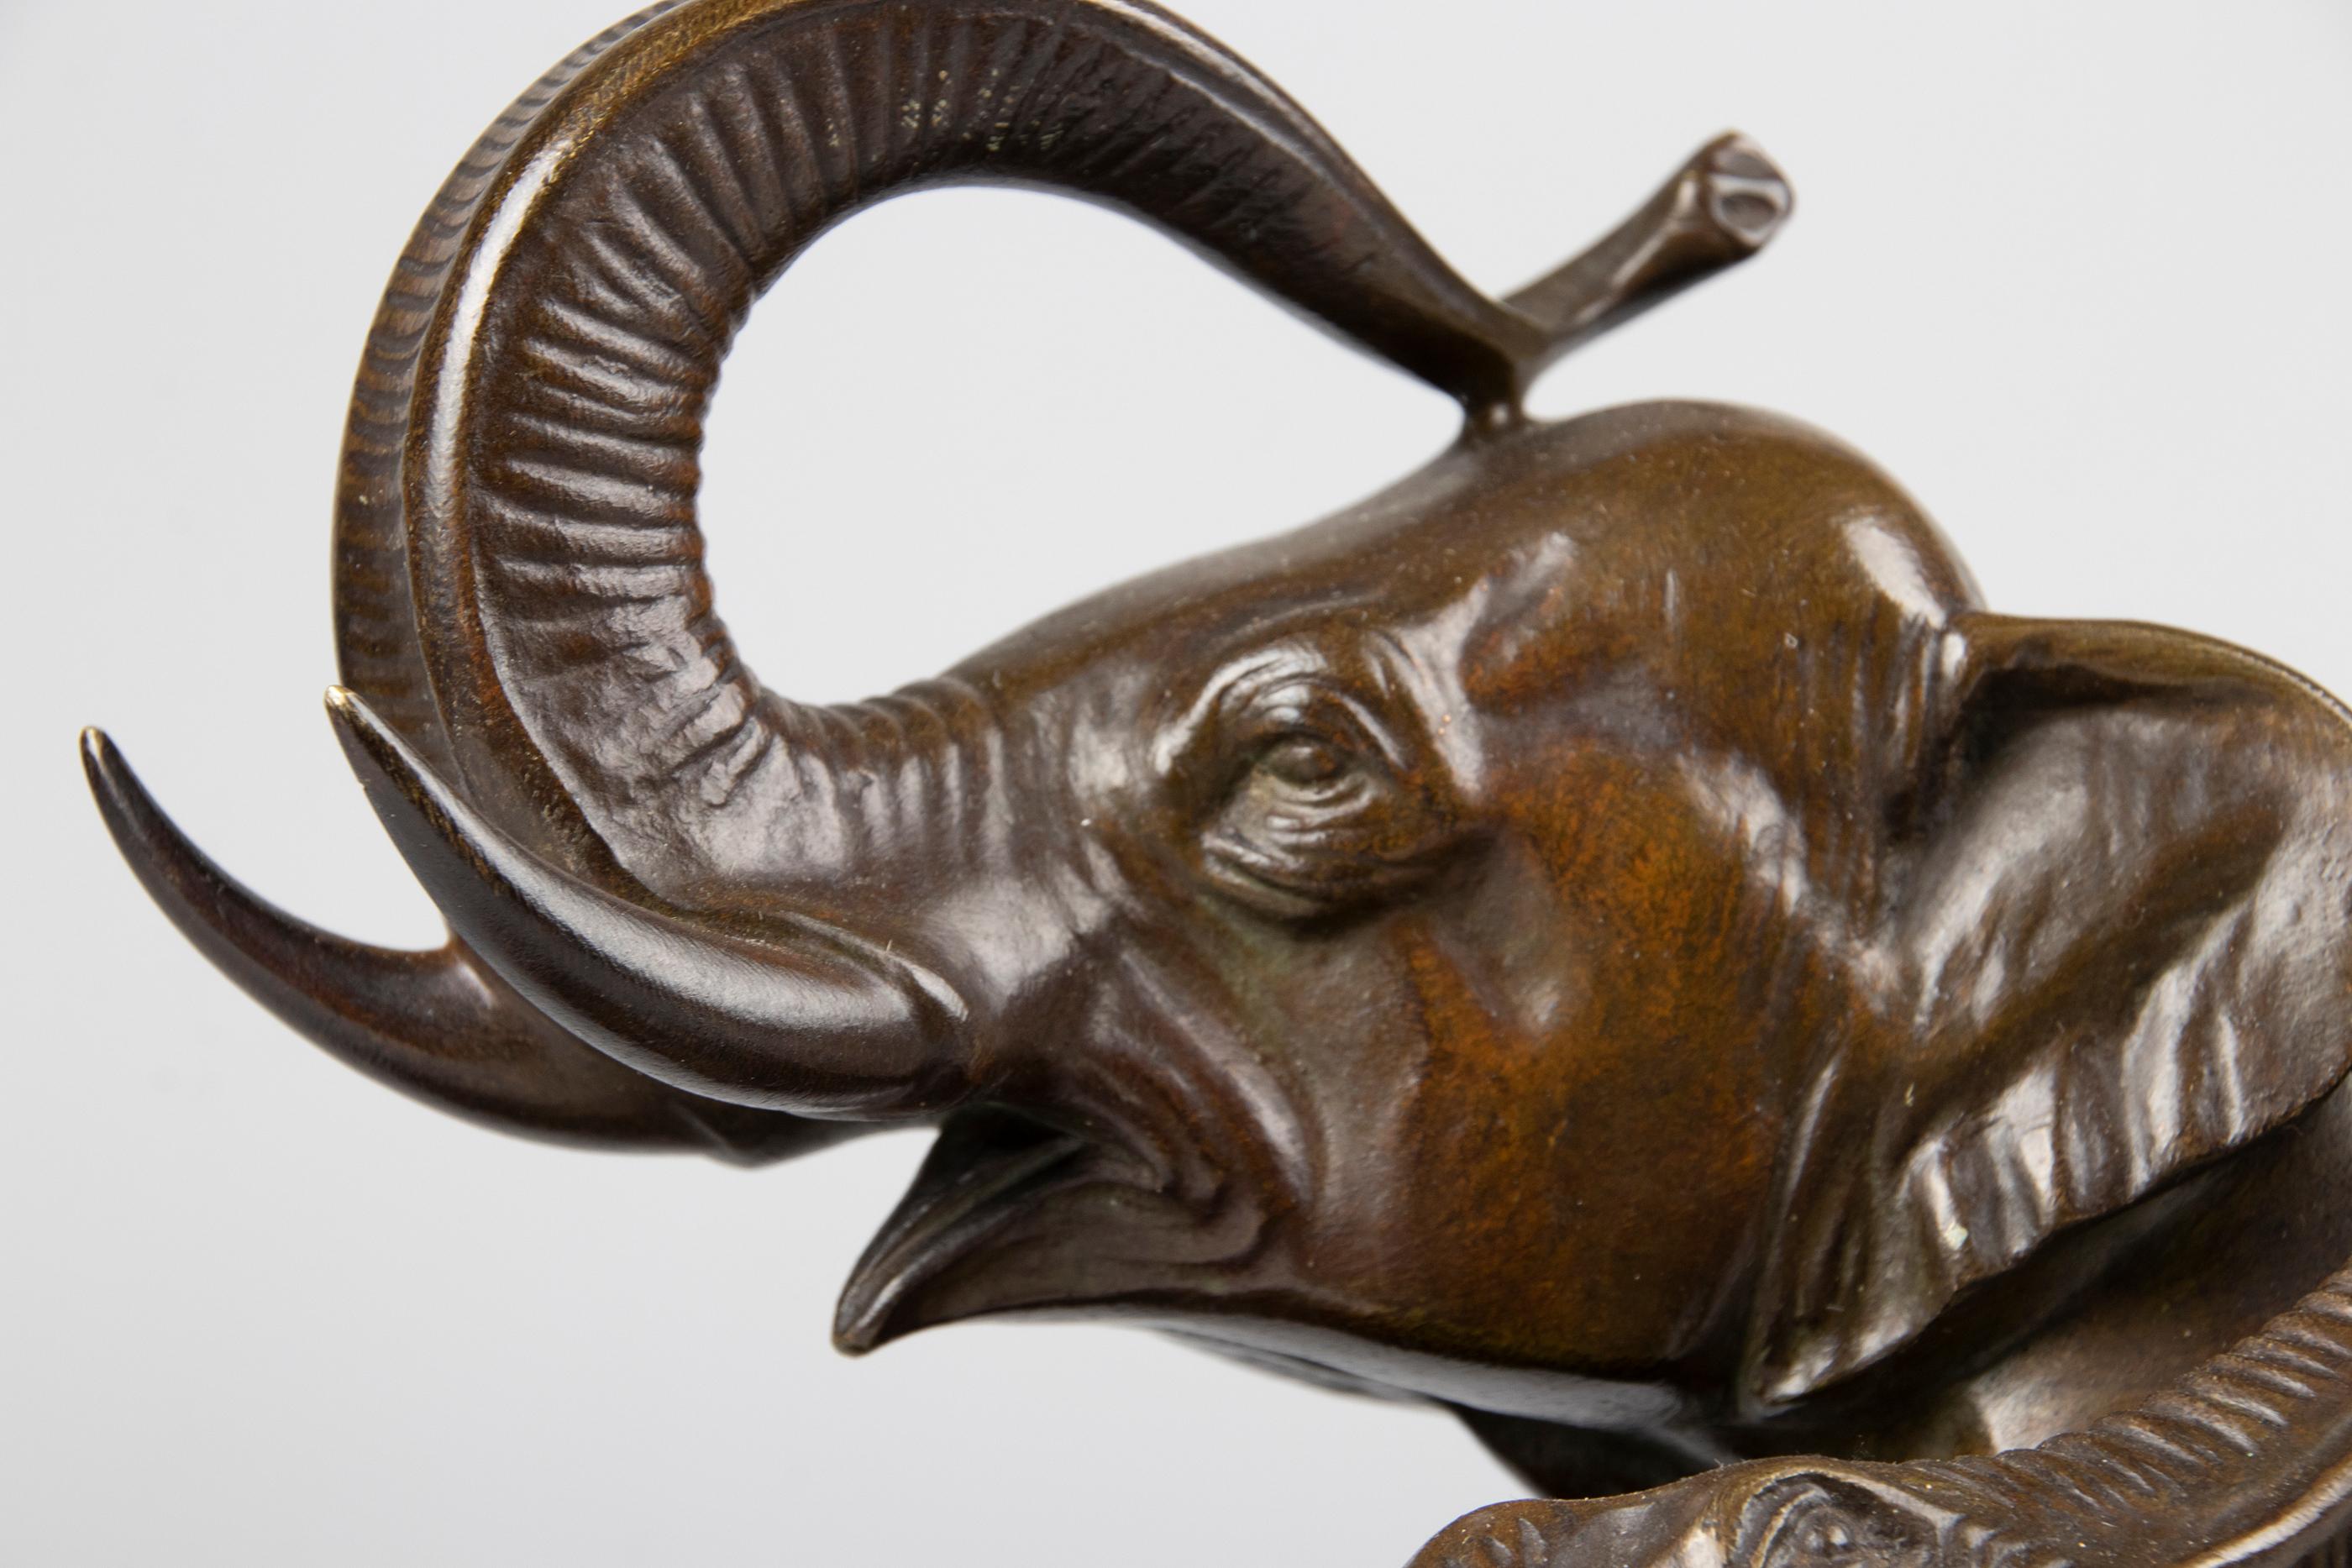 Early 20th Century Art Deco Bronze Sculpture Elephants, Irénée Rochard For Sale 1